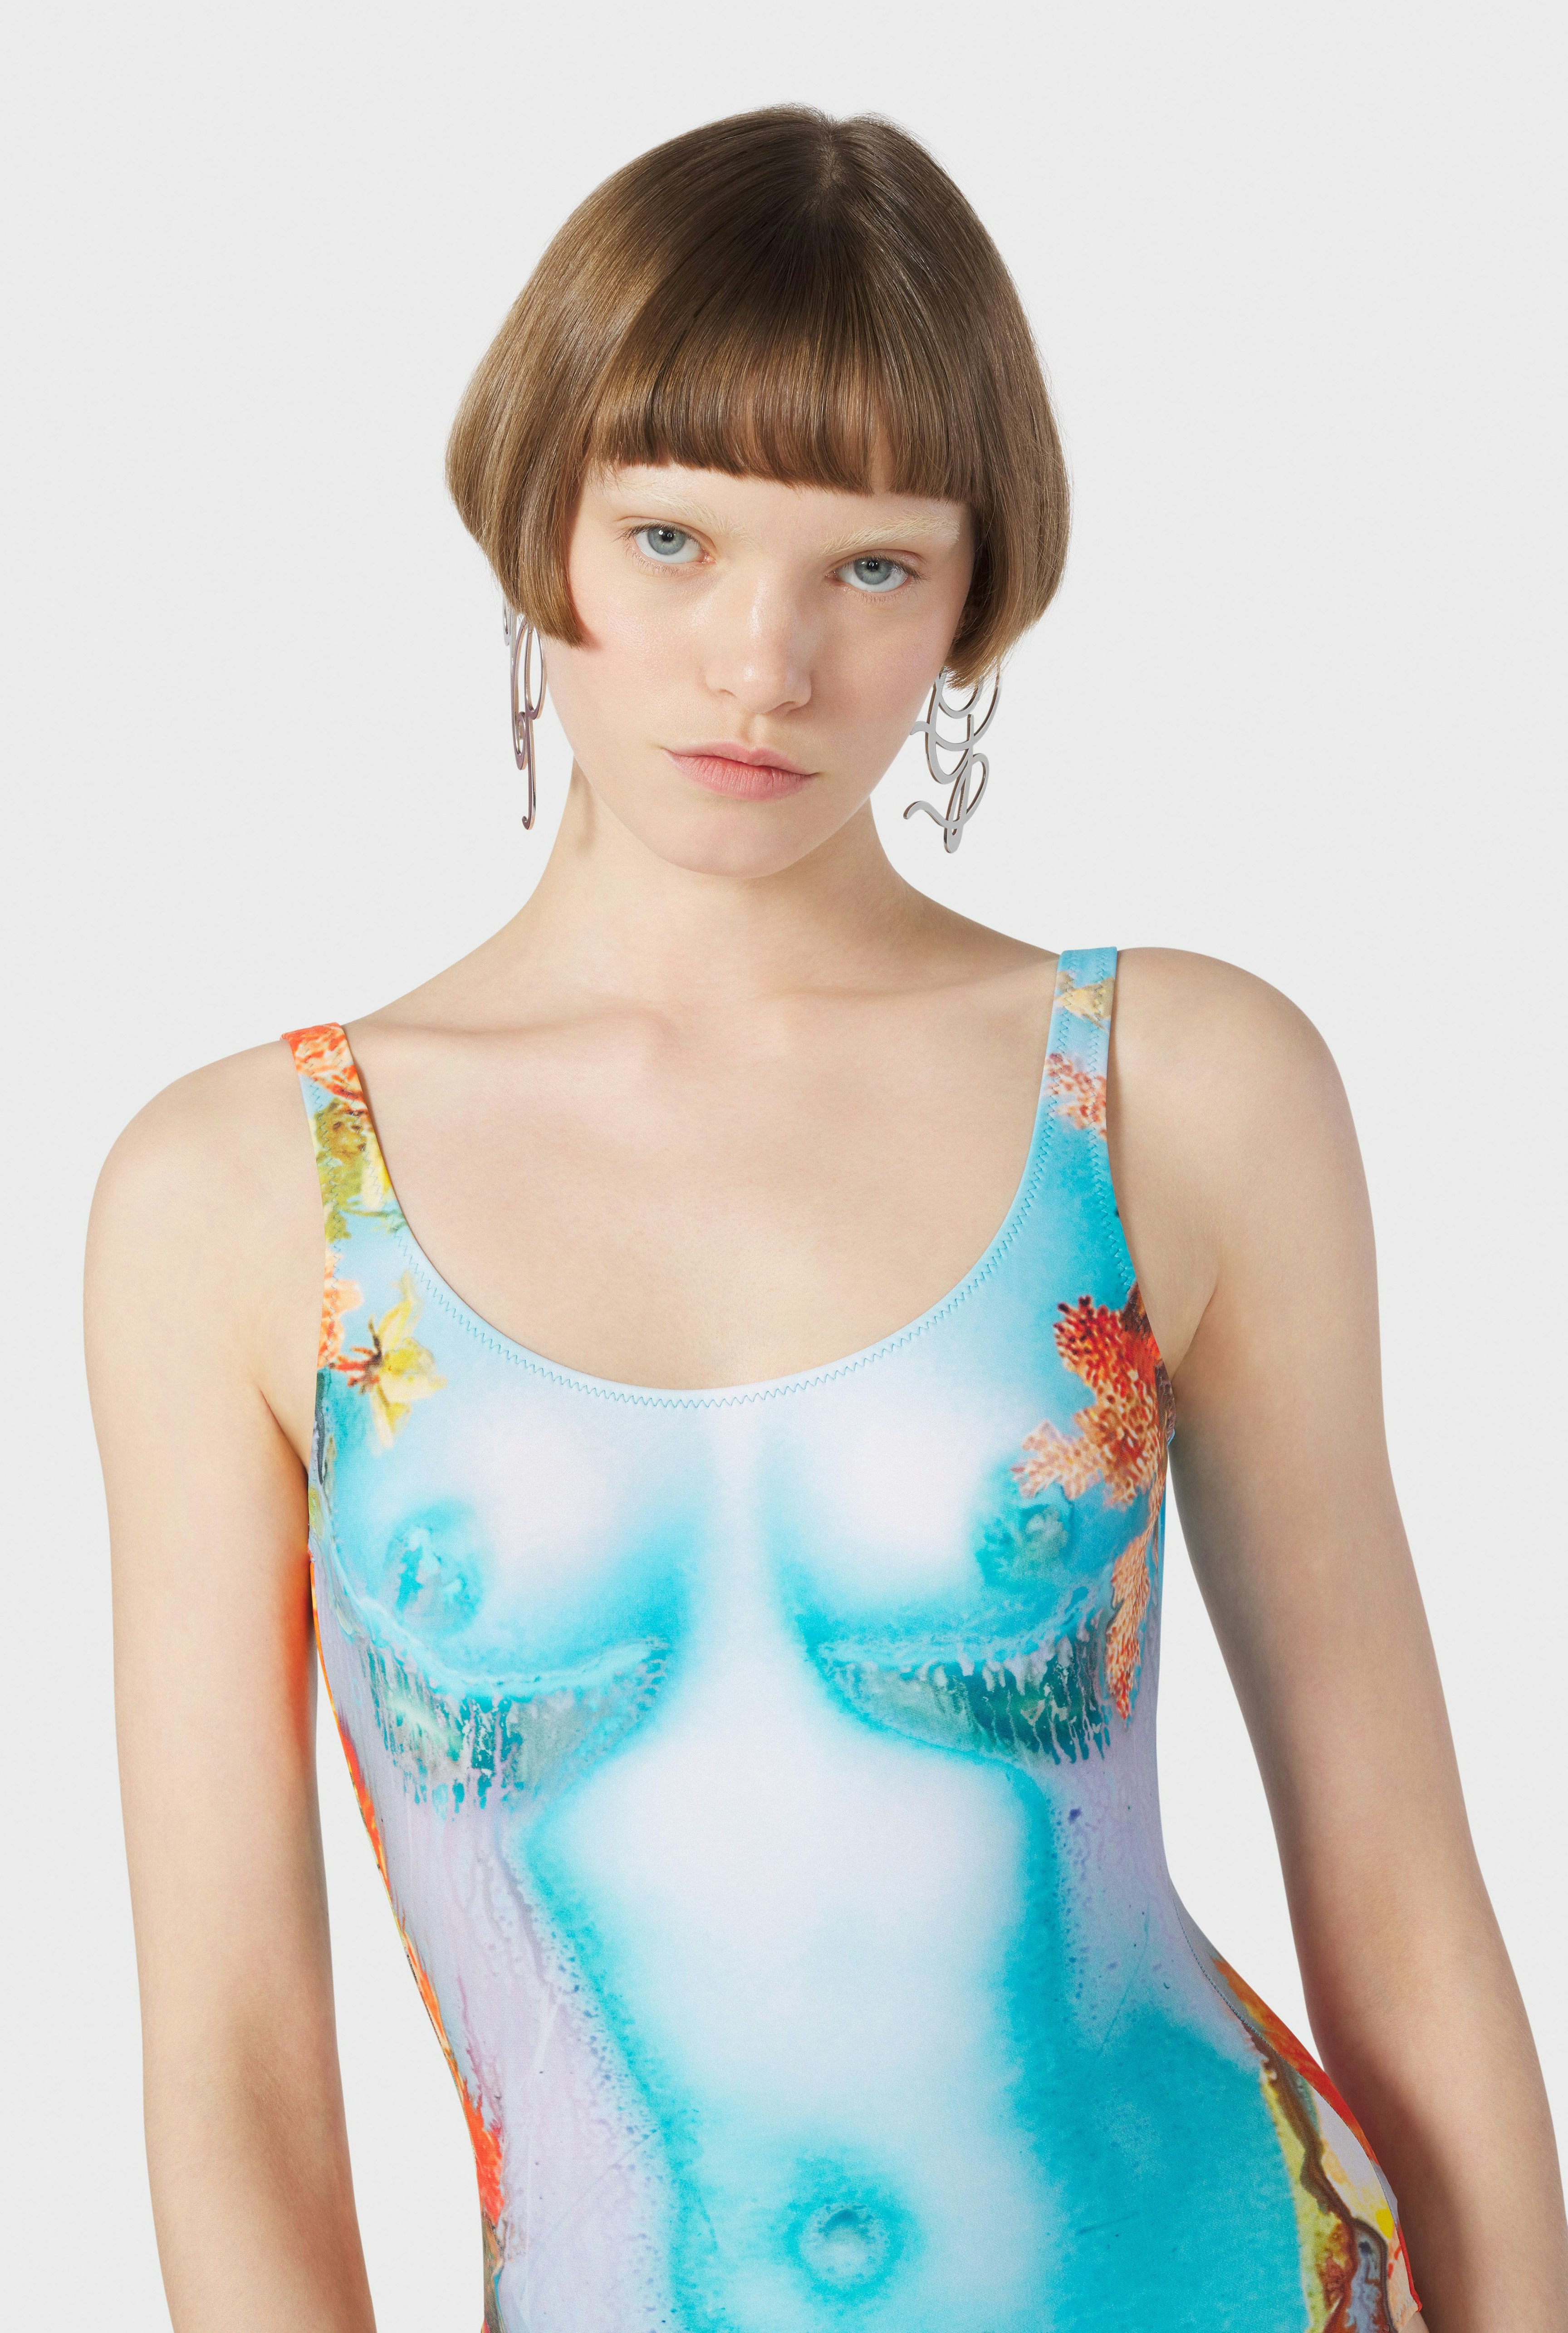 The Blue Body Flower Swimsuit